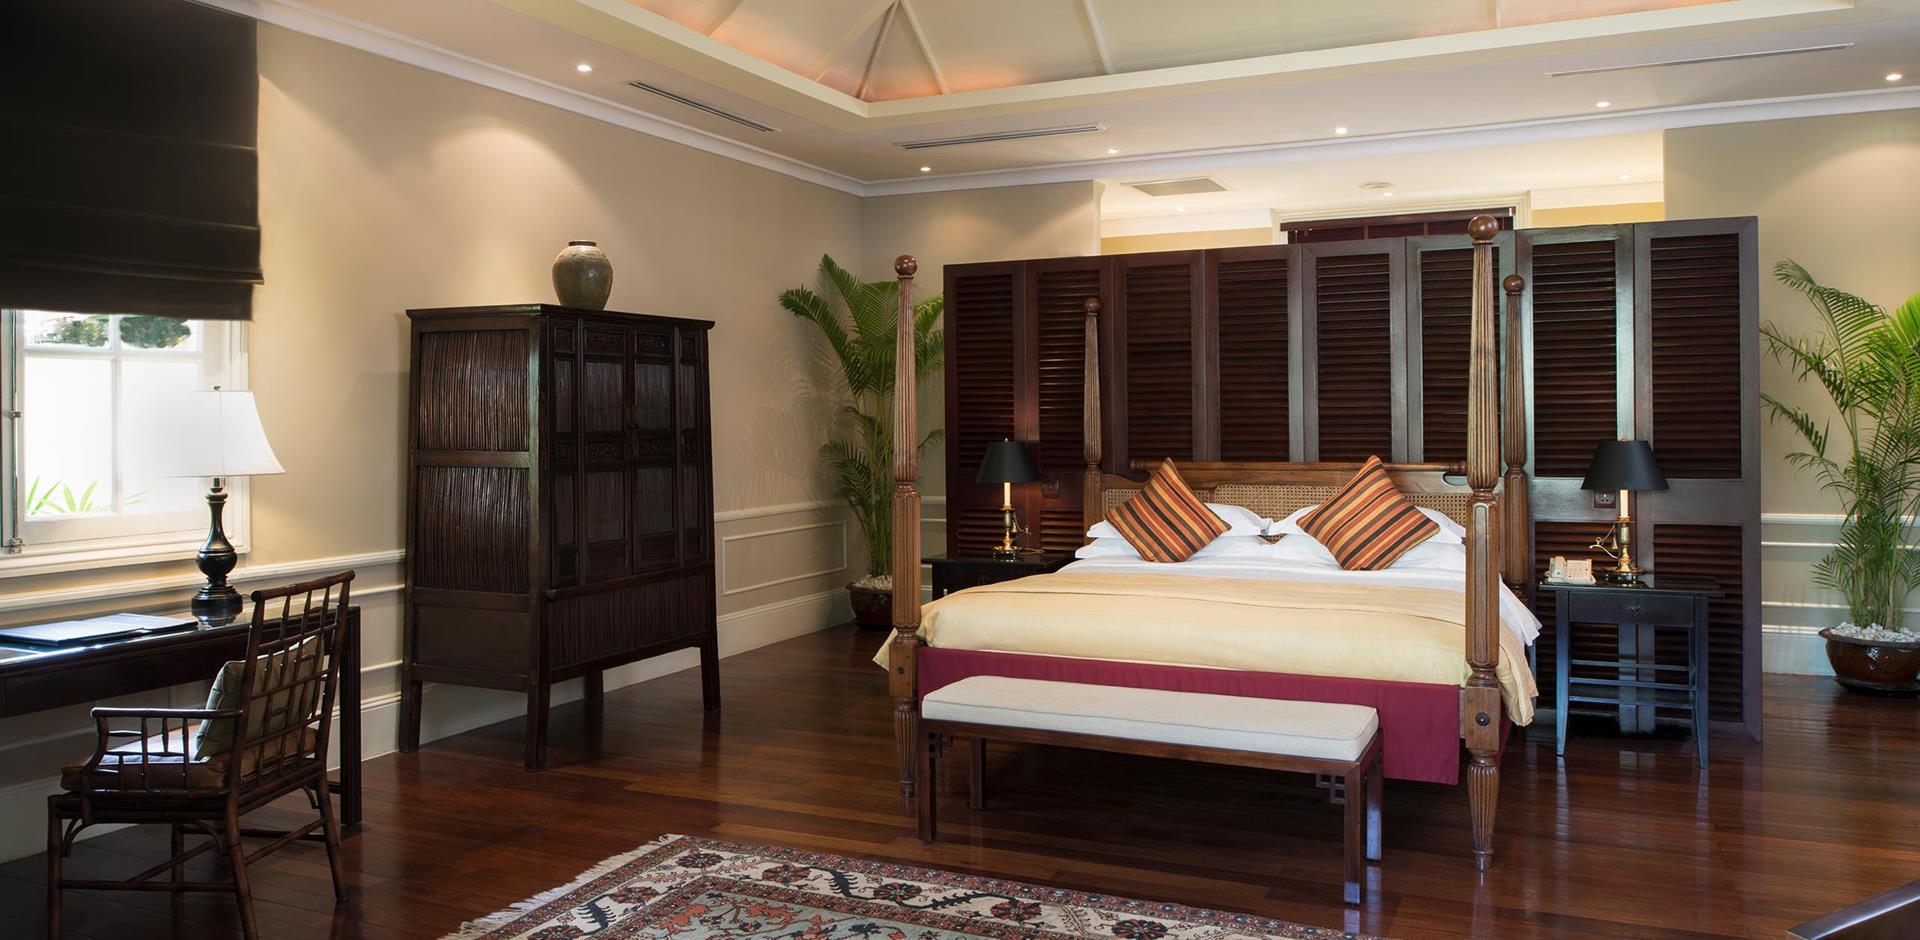 Bedroom, Raffles Grand Hotel d'Angkor, Cambodia, A&K